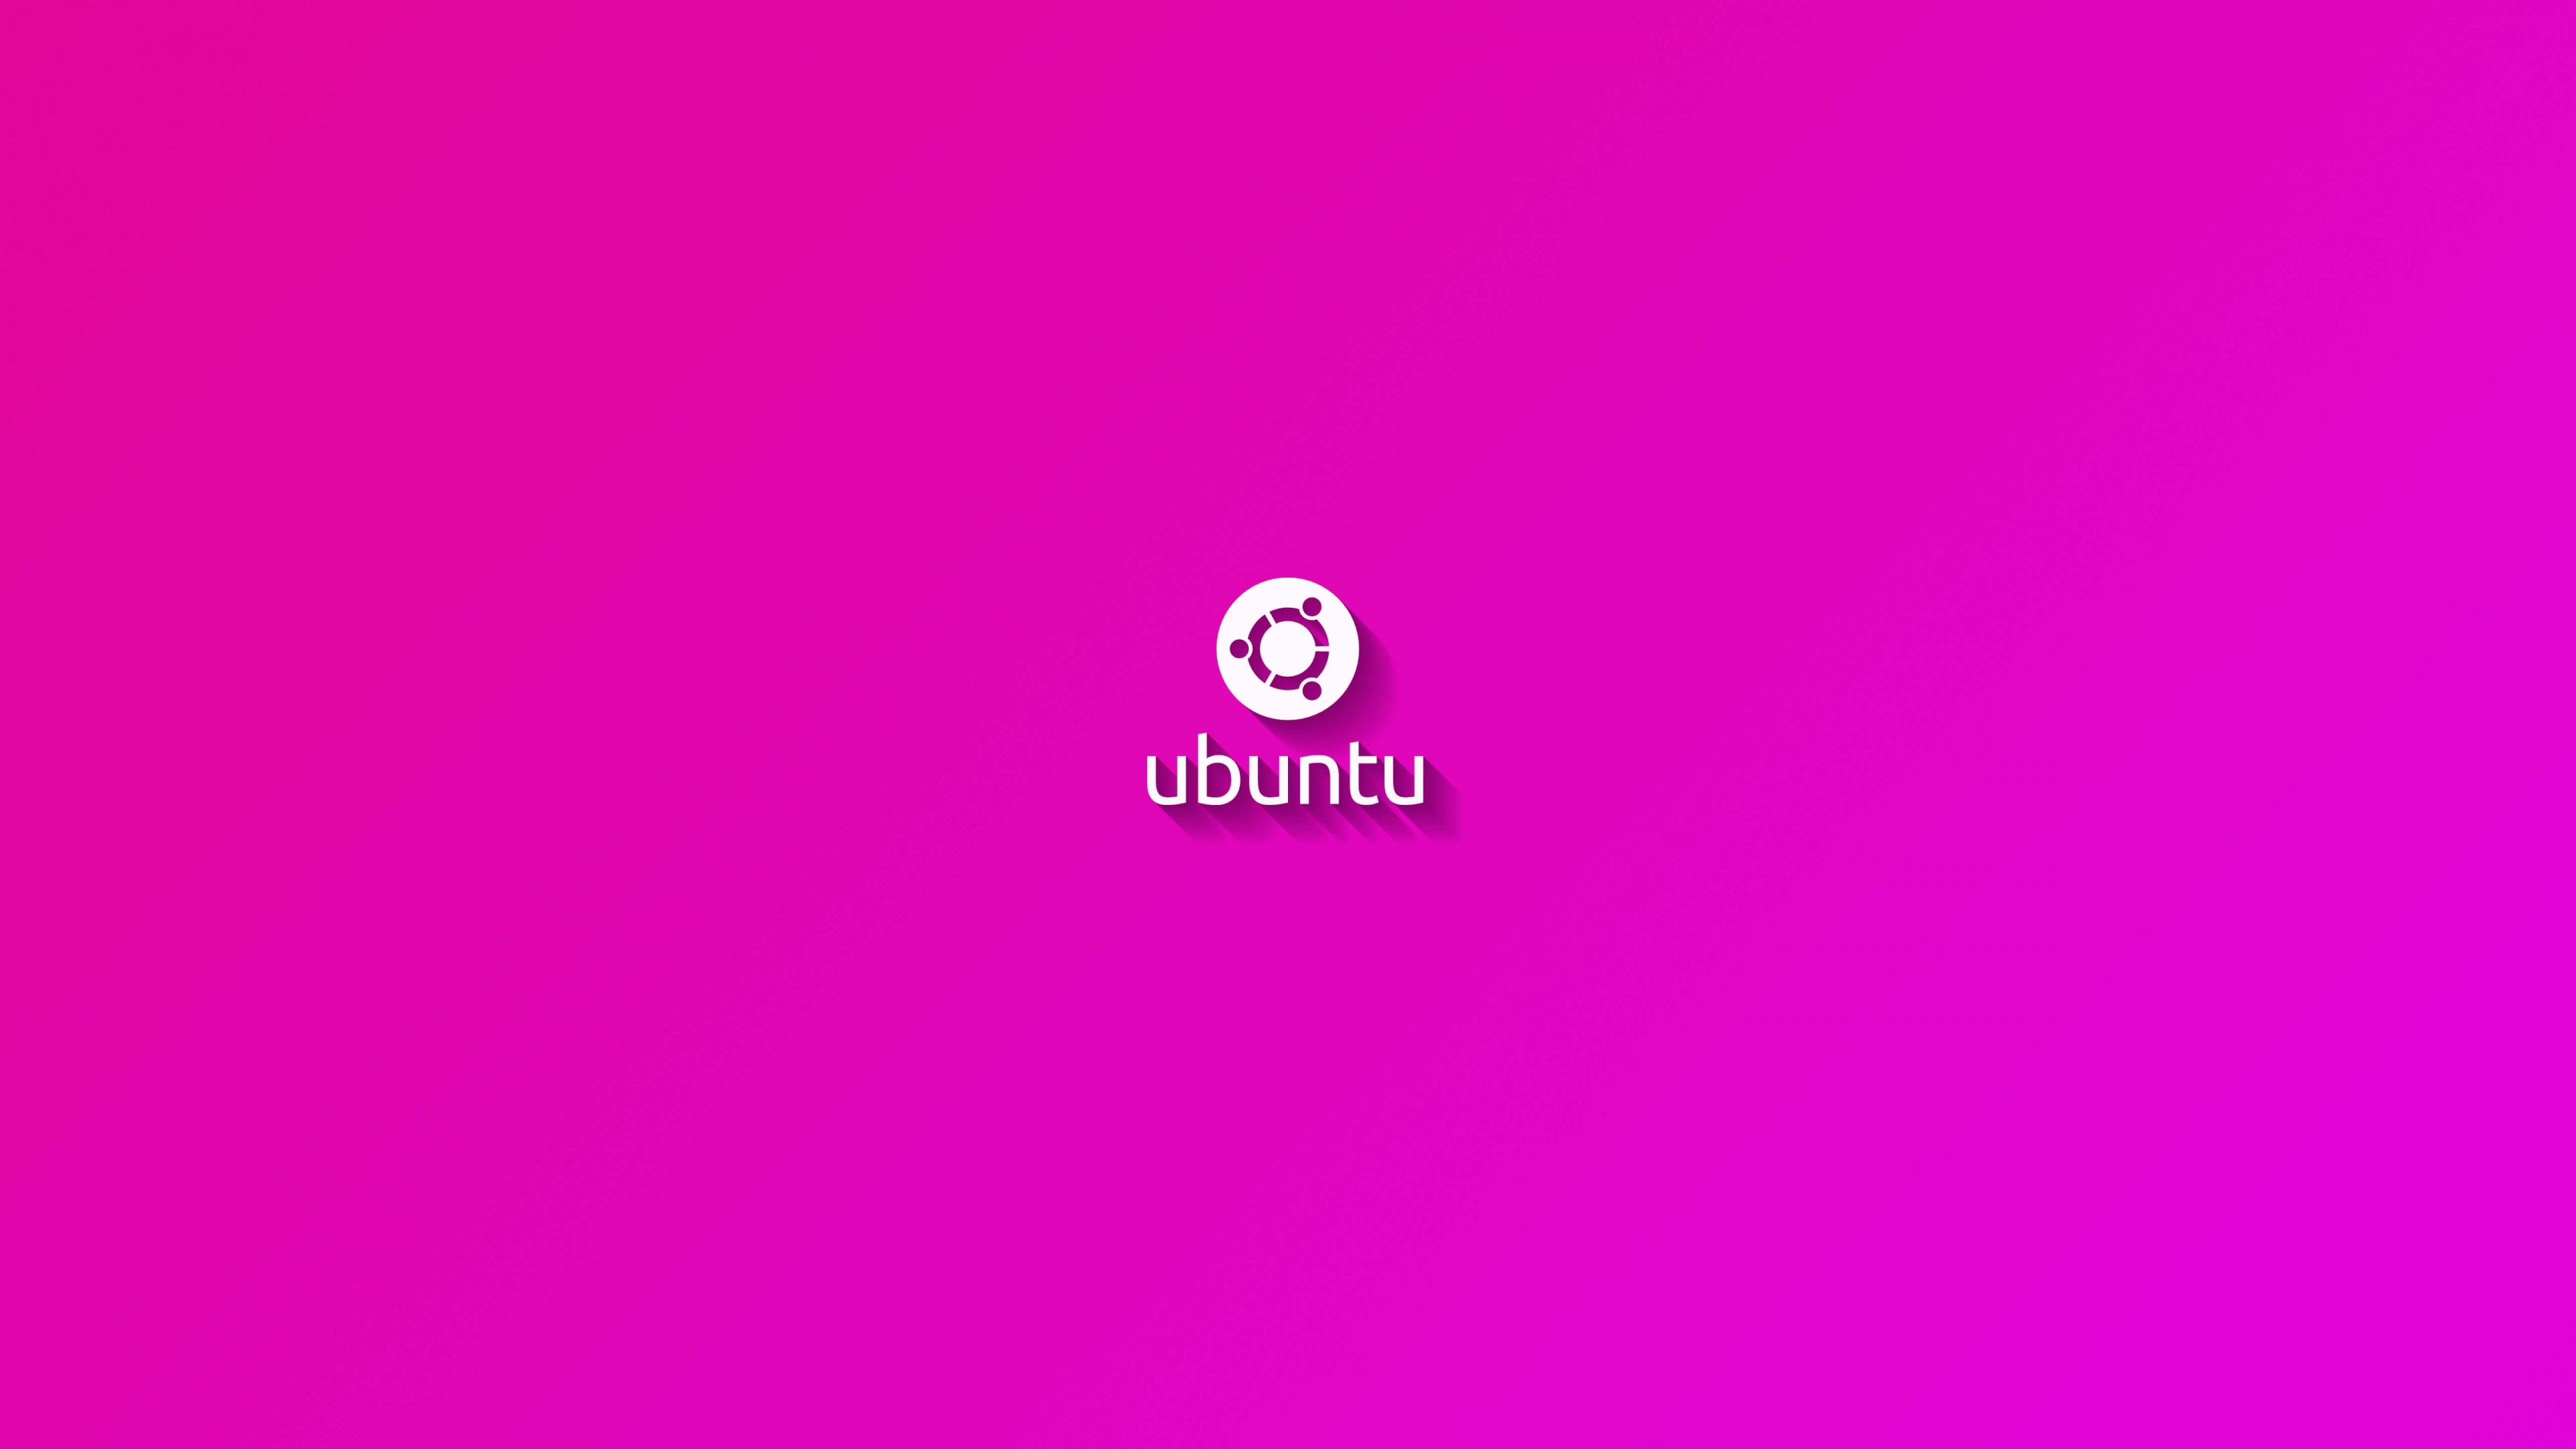 Ubuntu Flat Shadow Pink Wallpaper for Desktop 4K 3840x2160